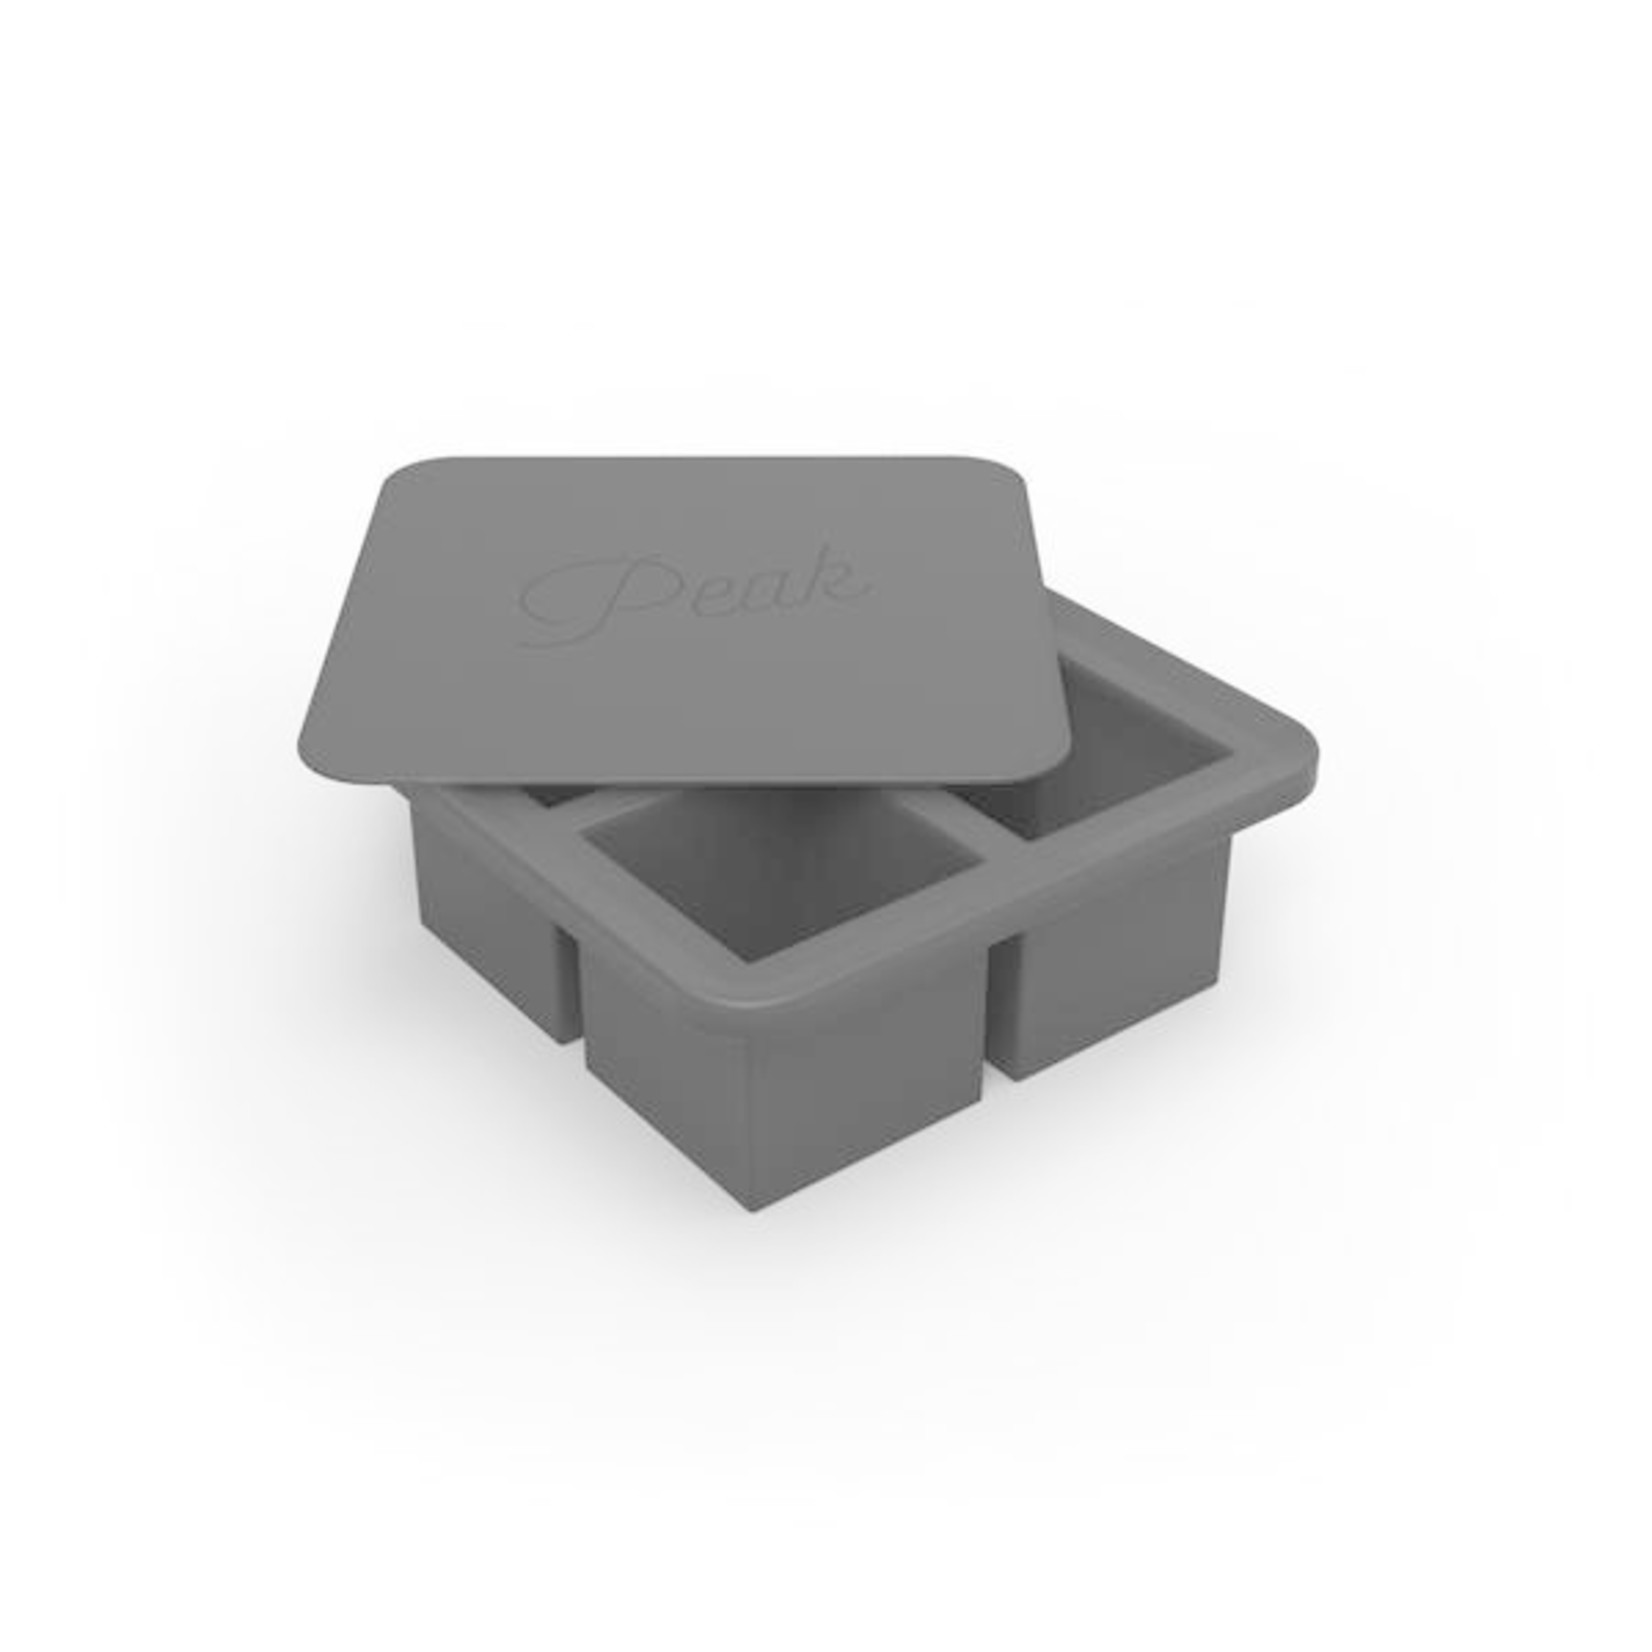 https://cdn.shoplightspeed.com/shops/613246/files/51332349/1652x1652x2/w-p-designs-peak-xl-ice-cube-tray-in-charcoal.jpg